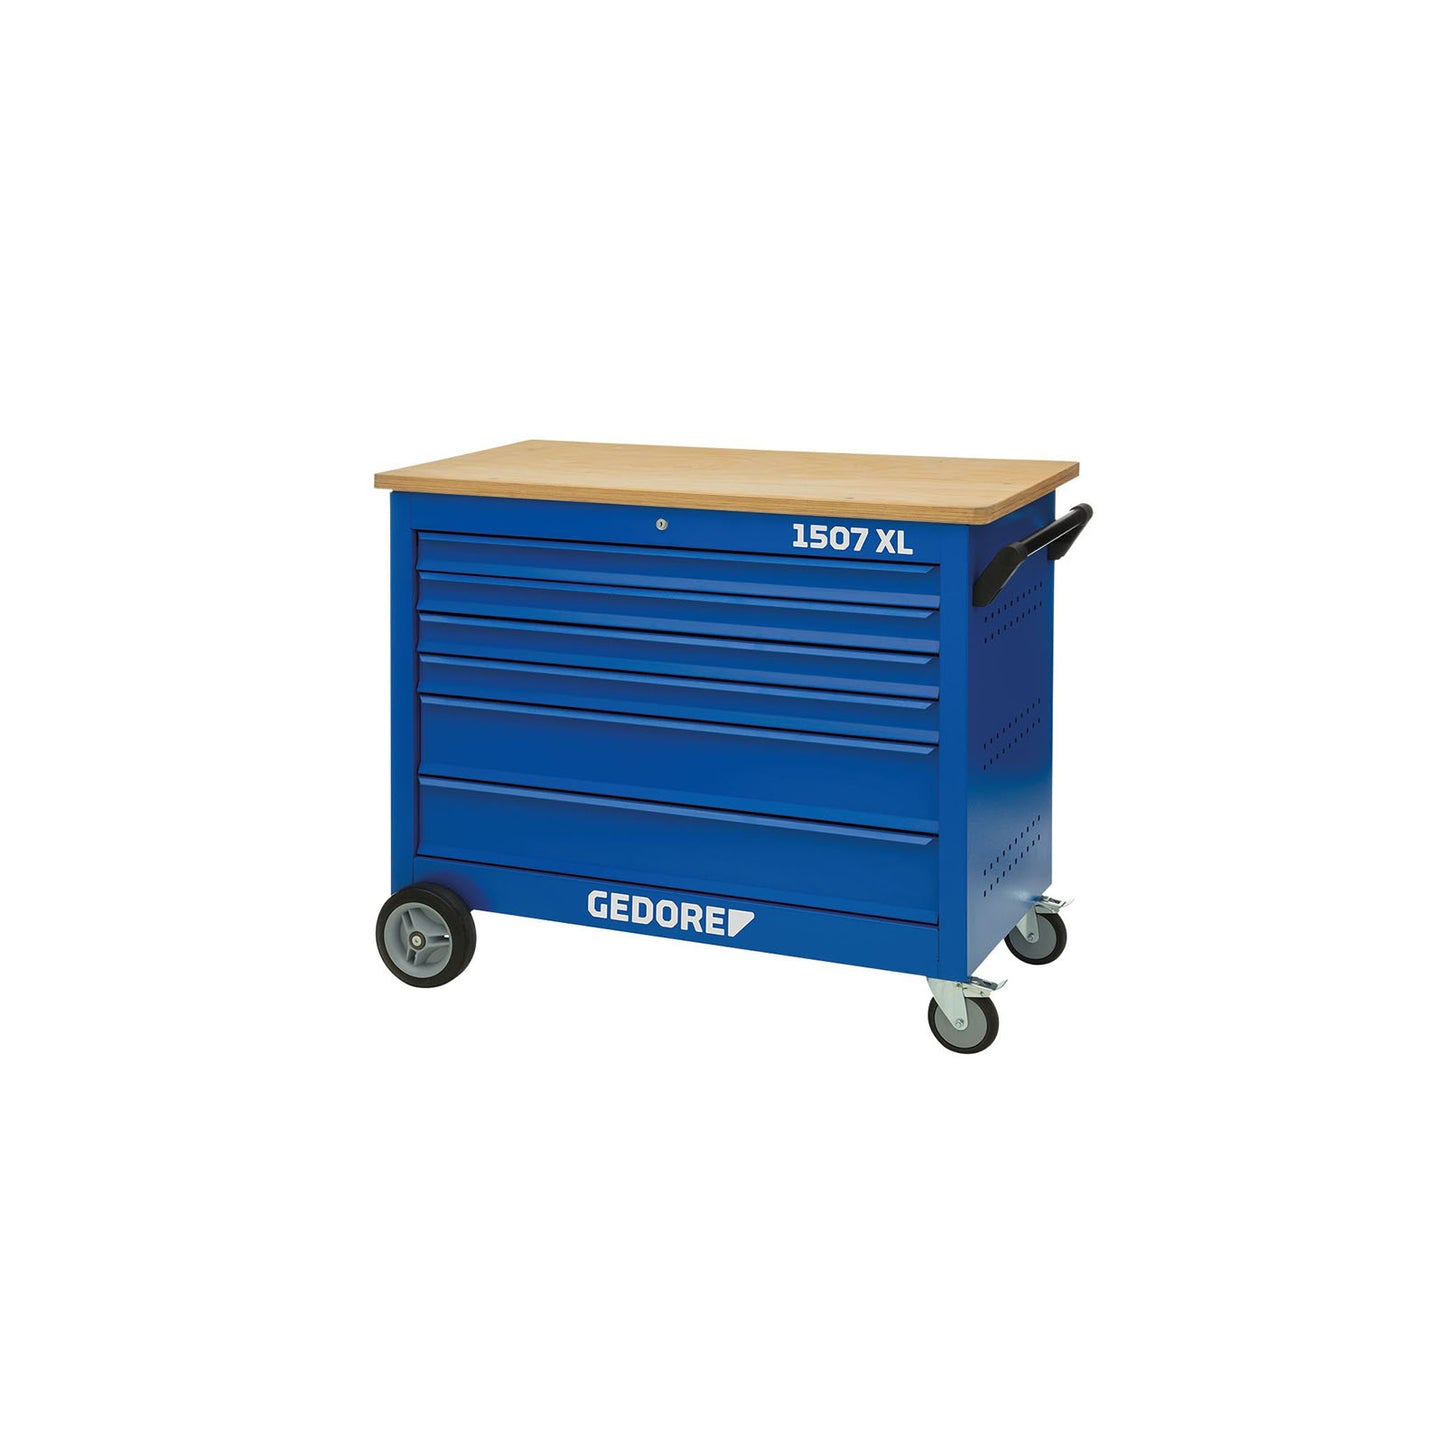 GEDORE 1507 XL 40200 - XL workbench 6 drawers (3127796)